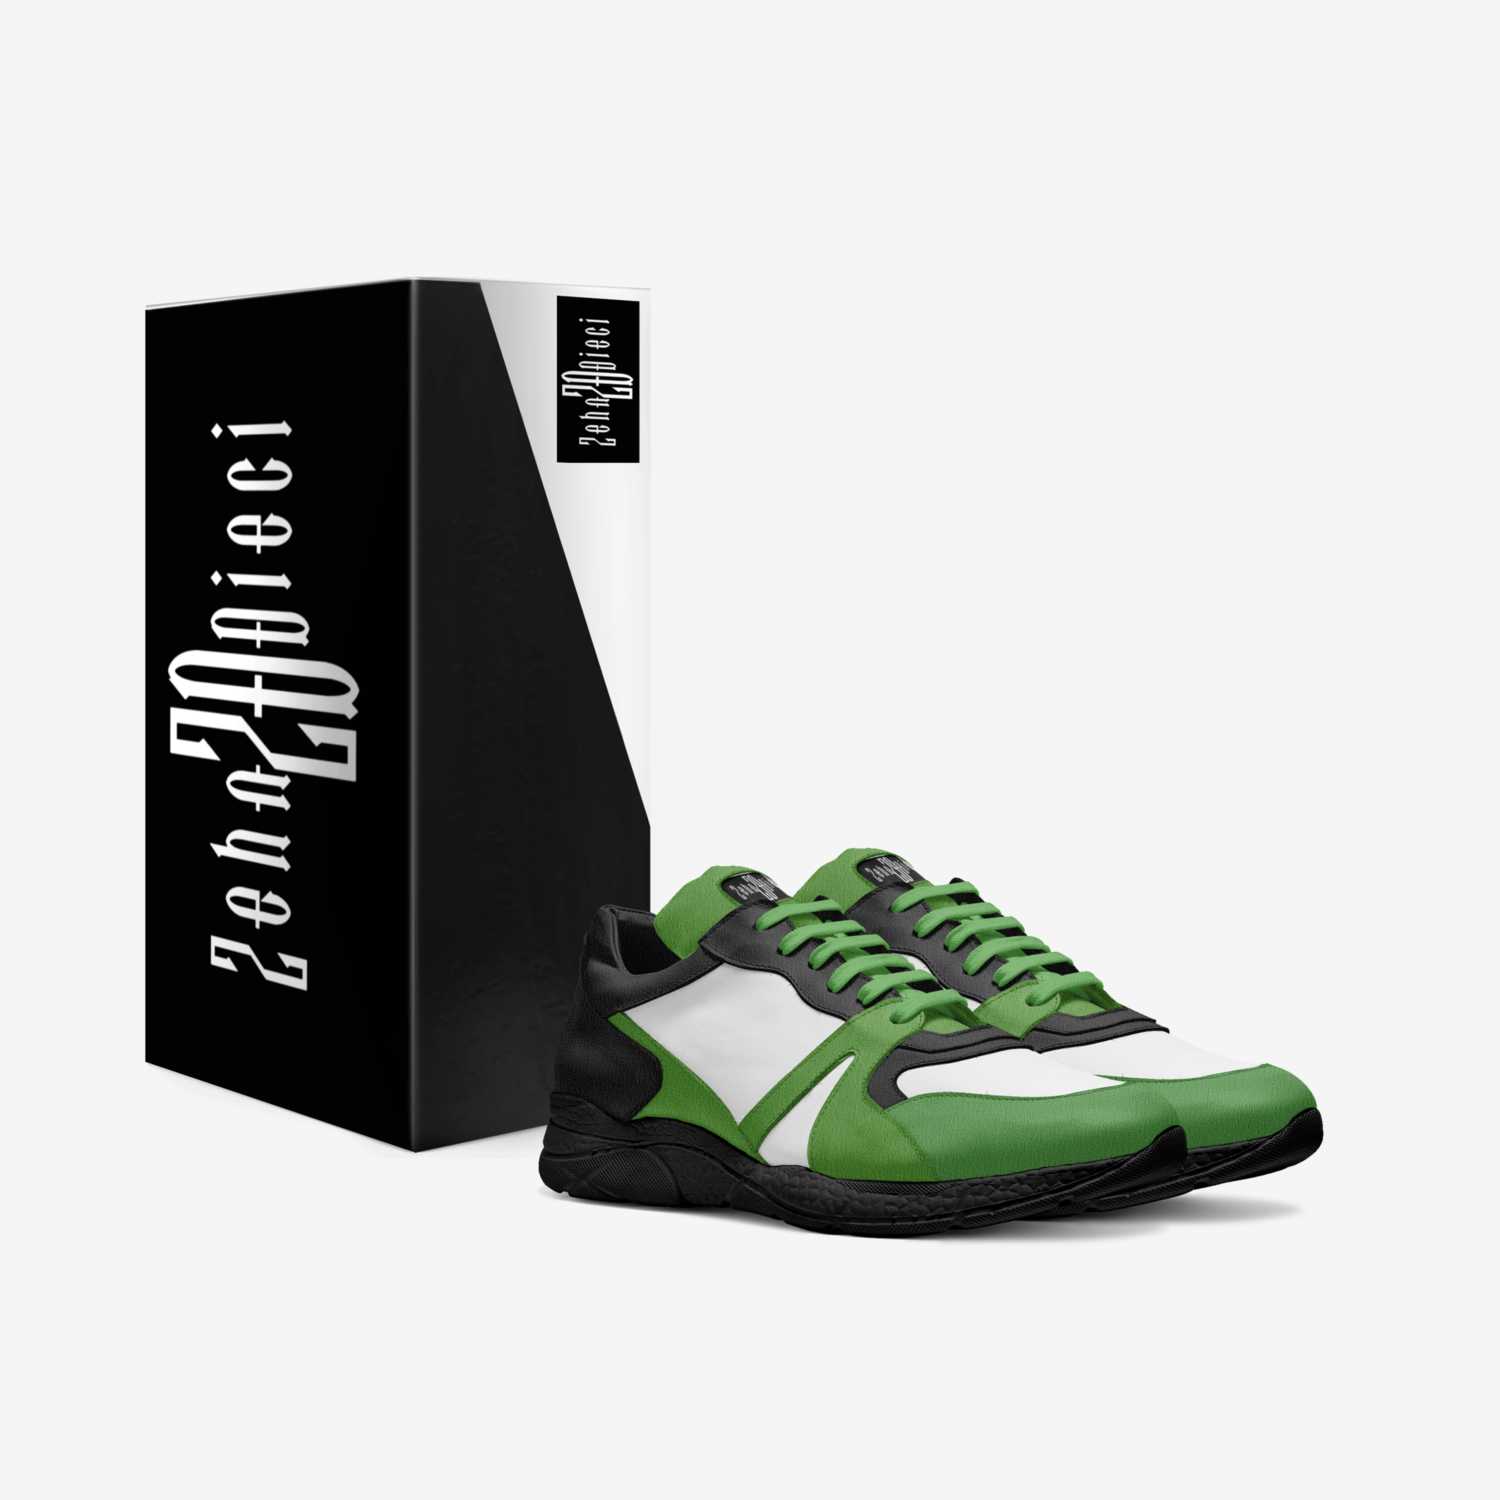 Tajiri custom made in Italy shoes by Zehn Dieci | Box view